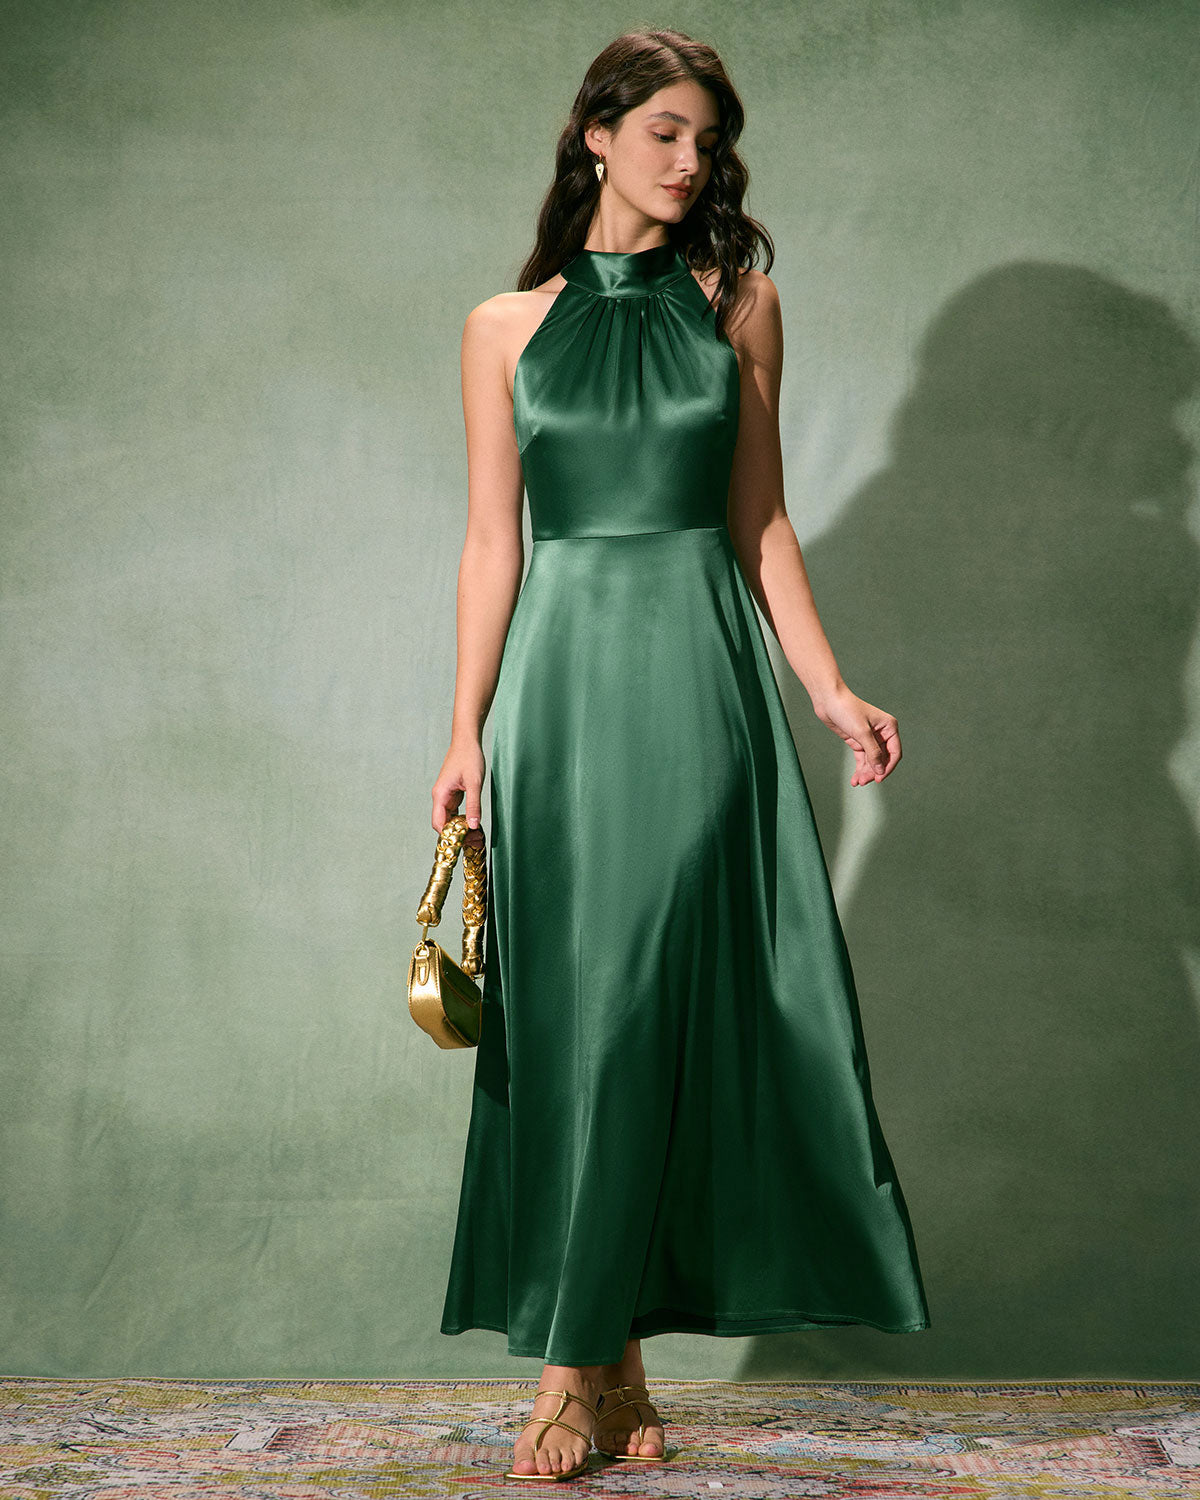 The Green Ruched Satin Maxi Dress Dresses - RIHOAS